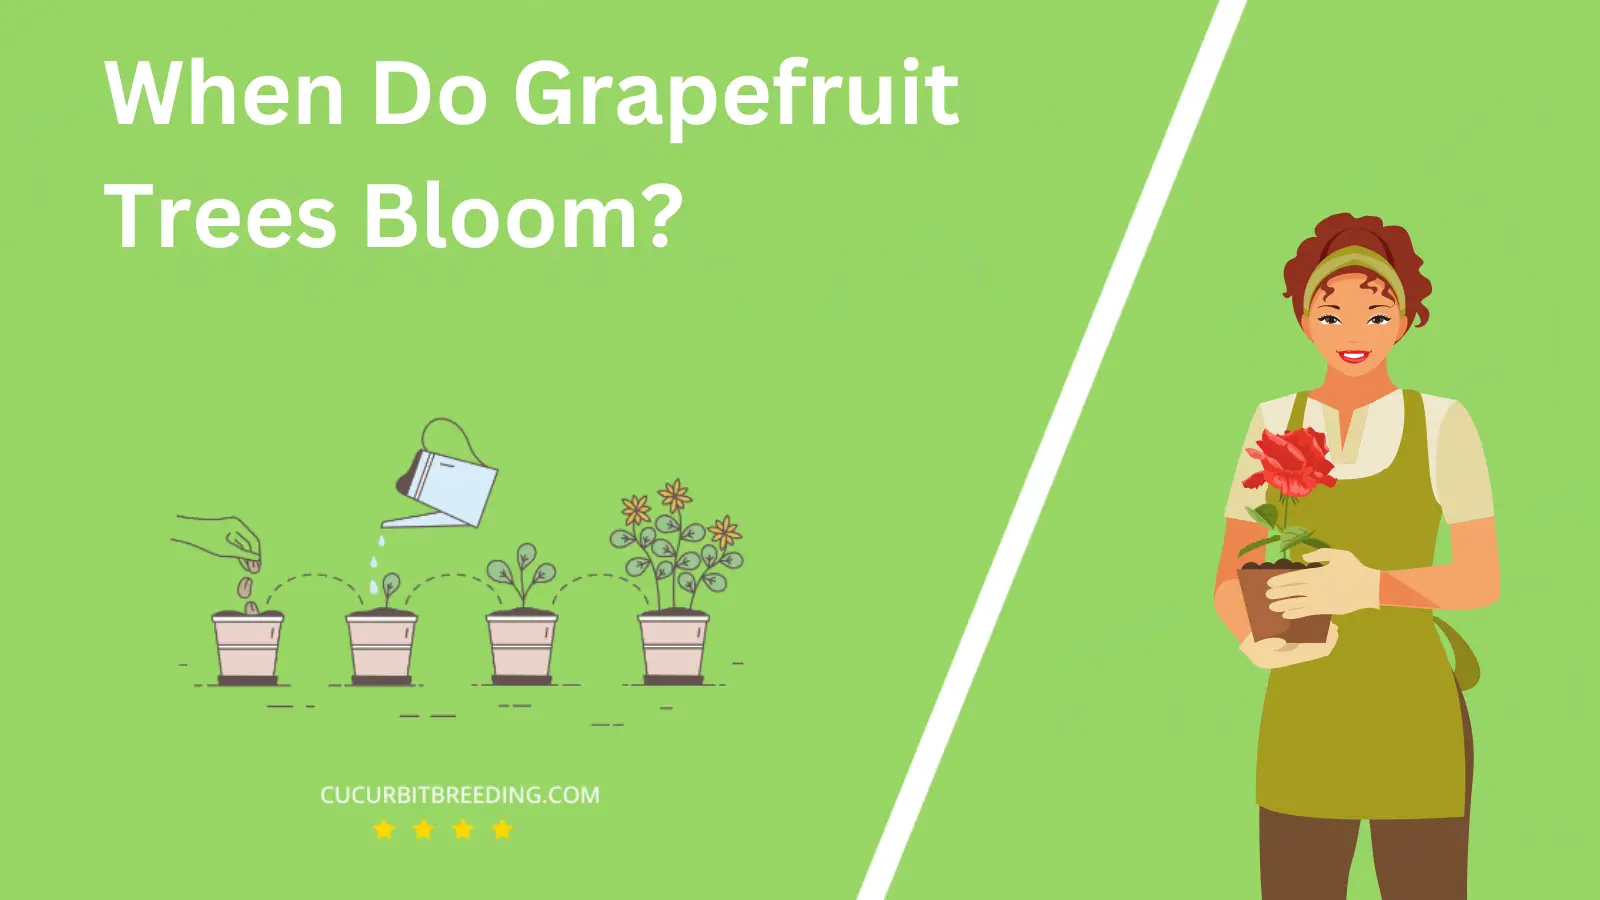 When Do Grapefruit Trees Bloom?